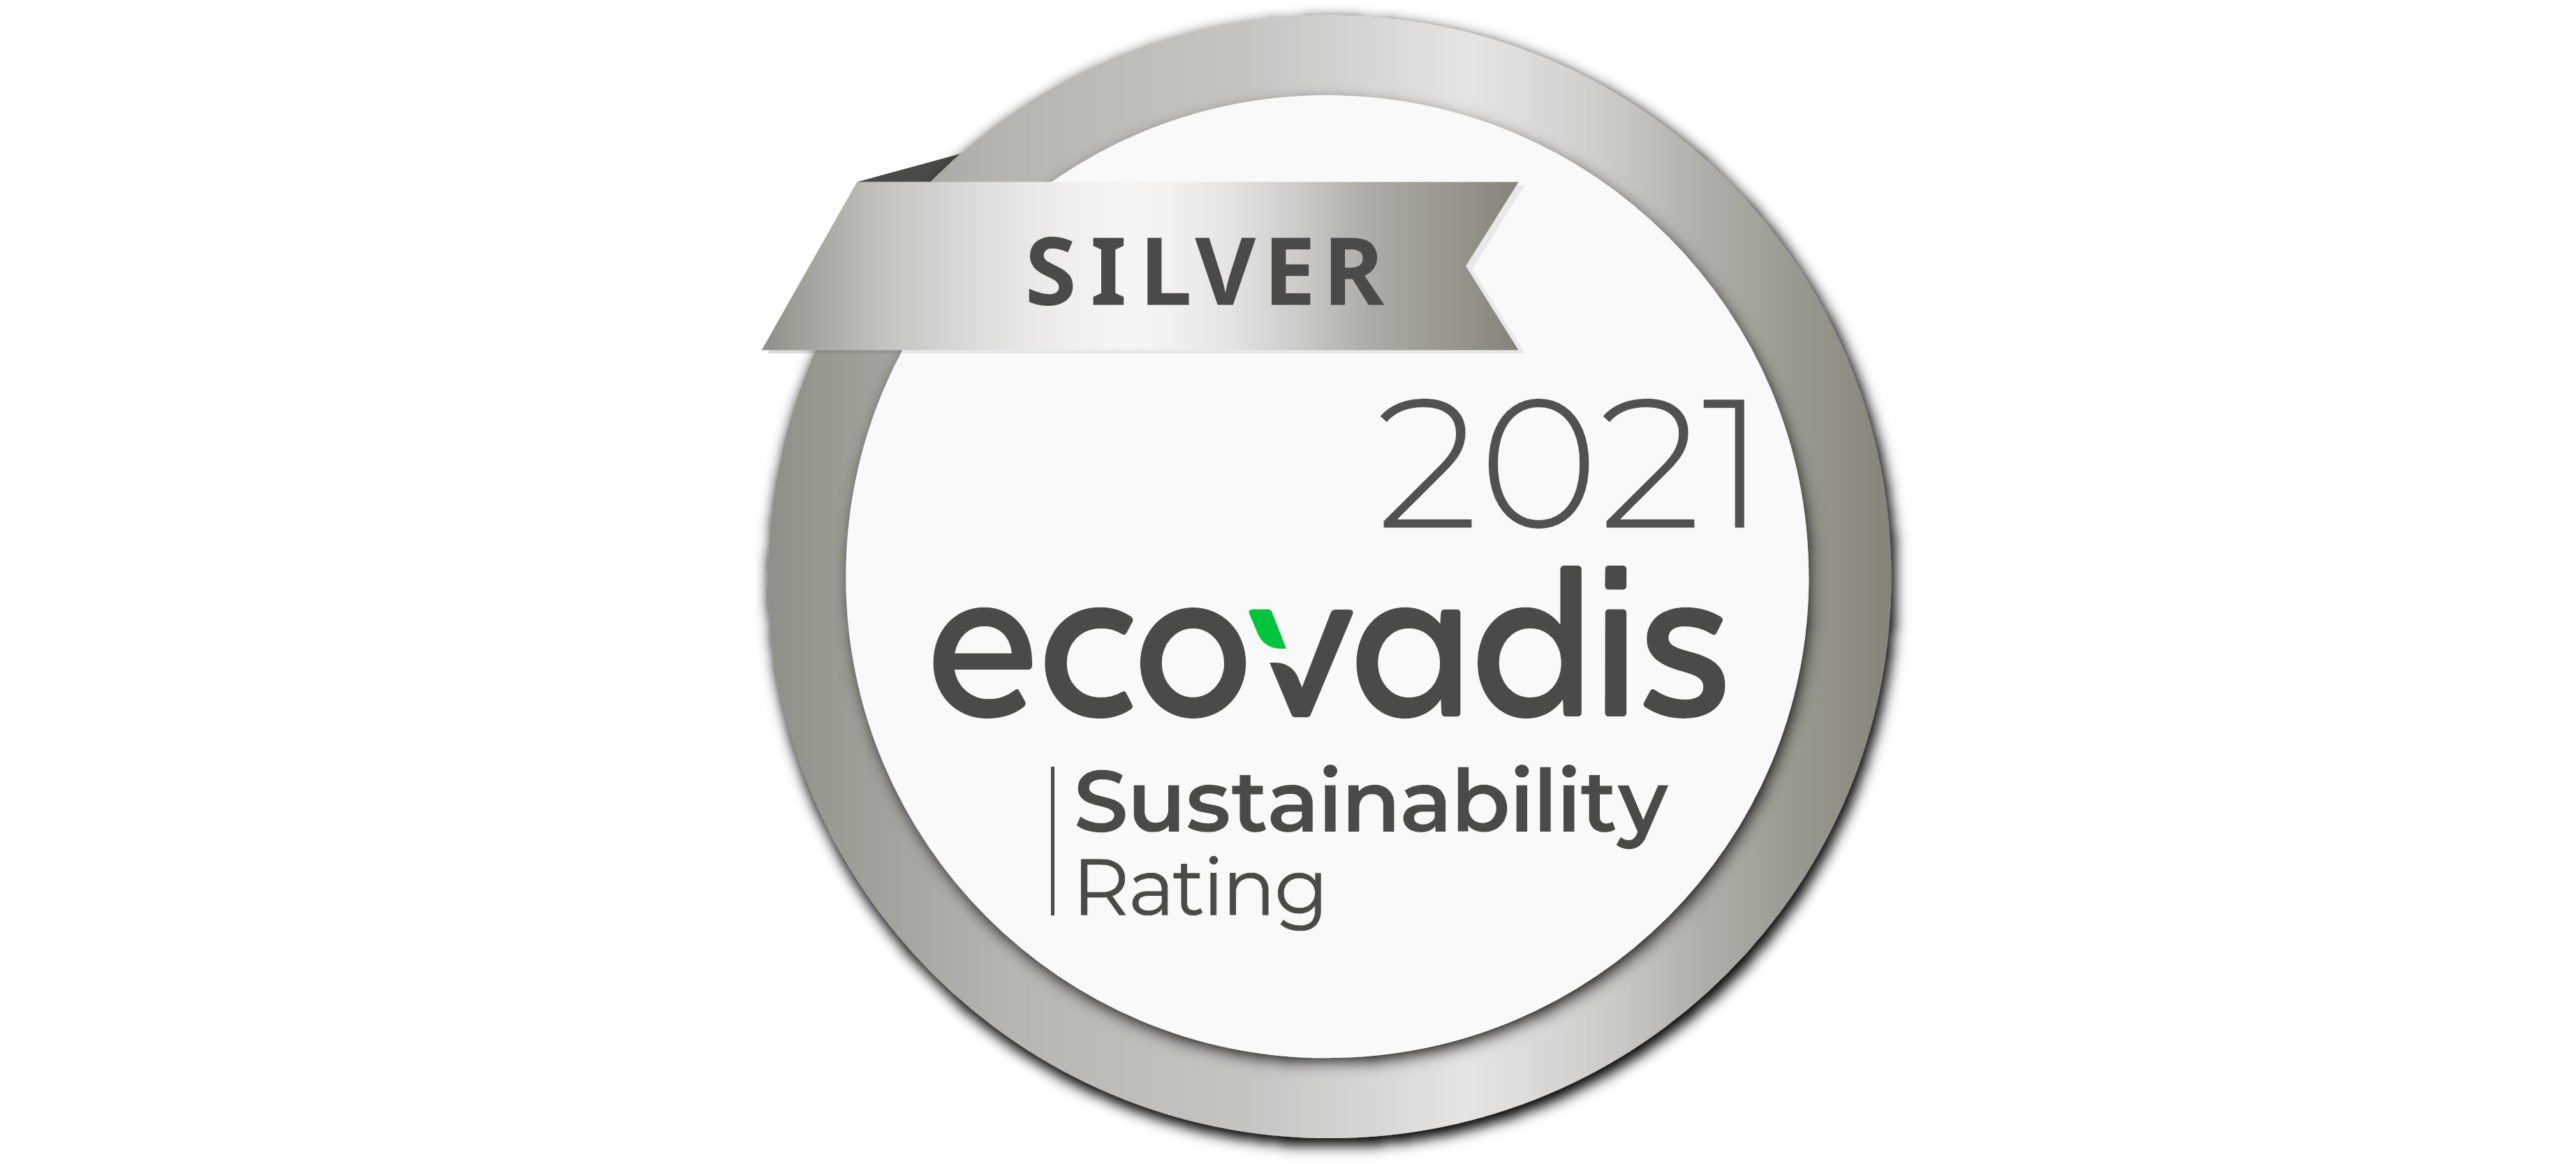 IMD demonstrates sustainability progress with EcoVadis rating